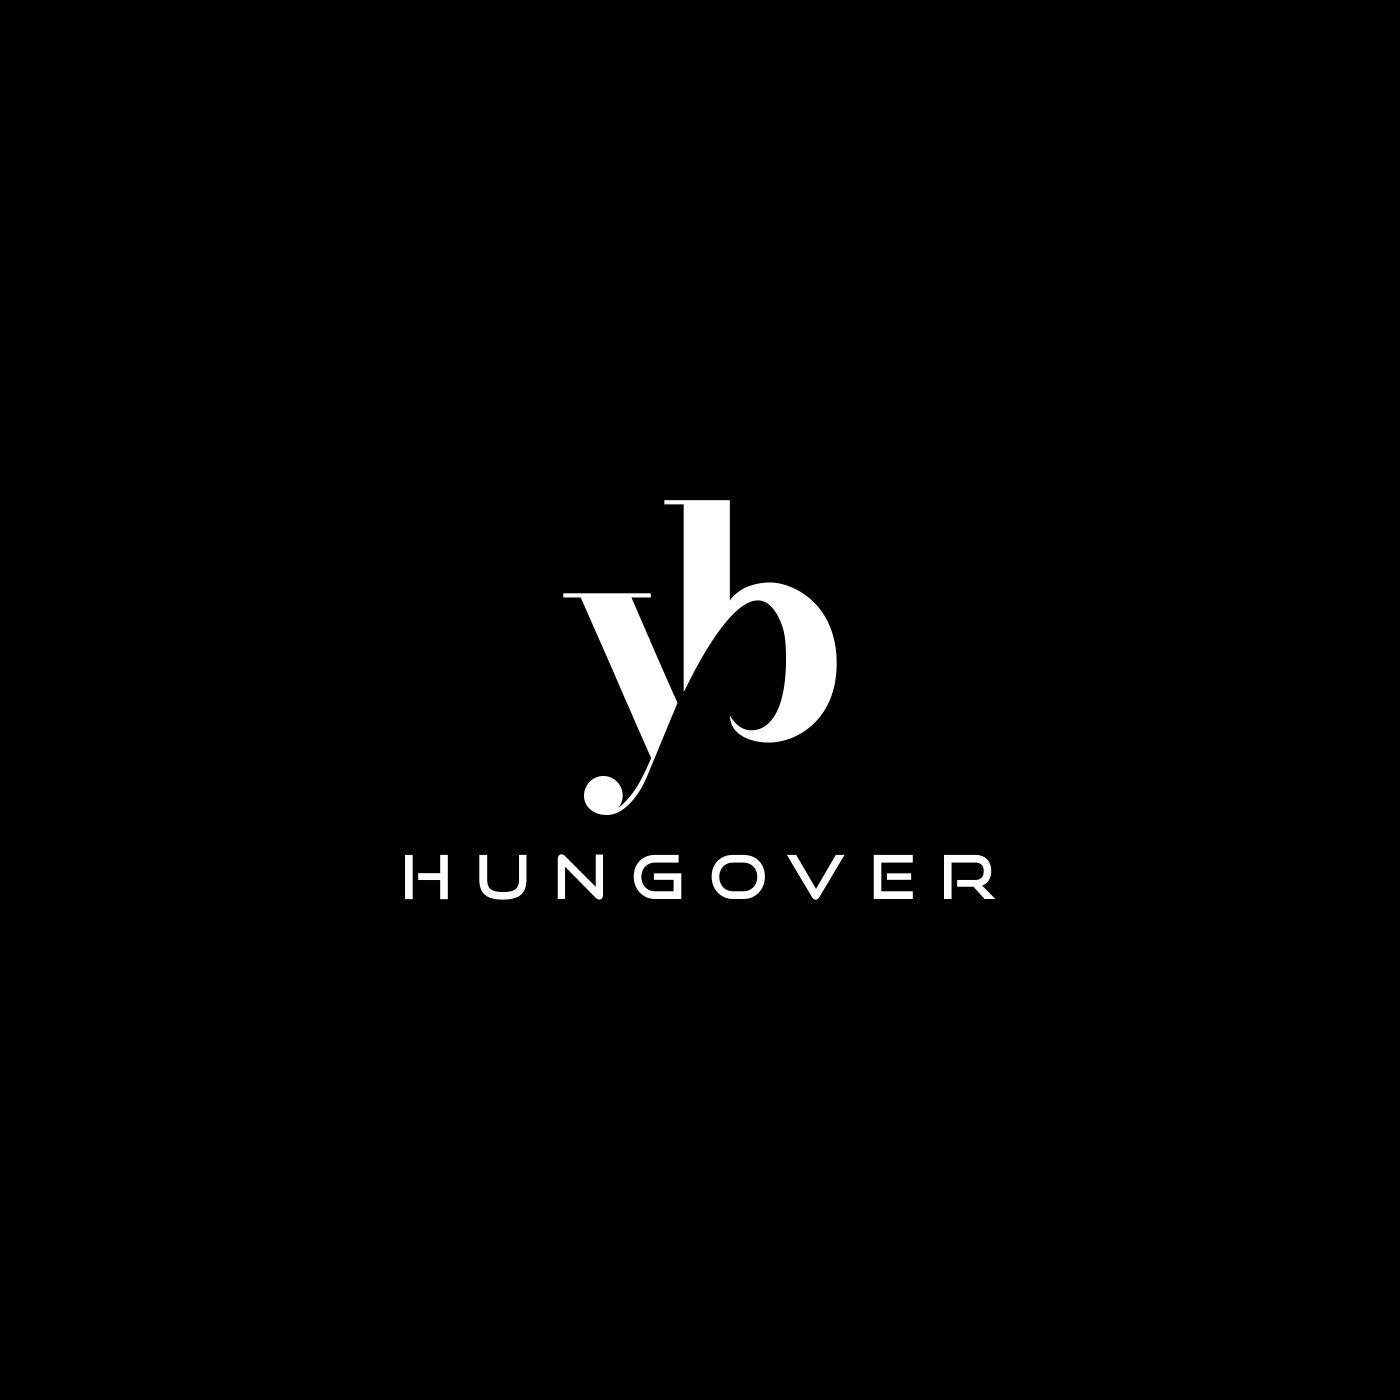 YB Logo - Bold, Professional, Health And Wellness Logo Design for YB HUNGOVER ...